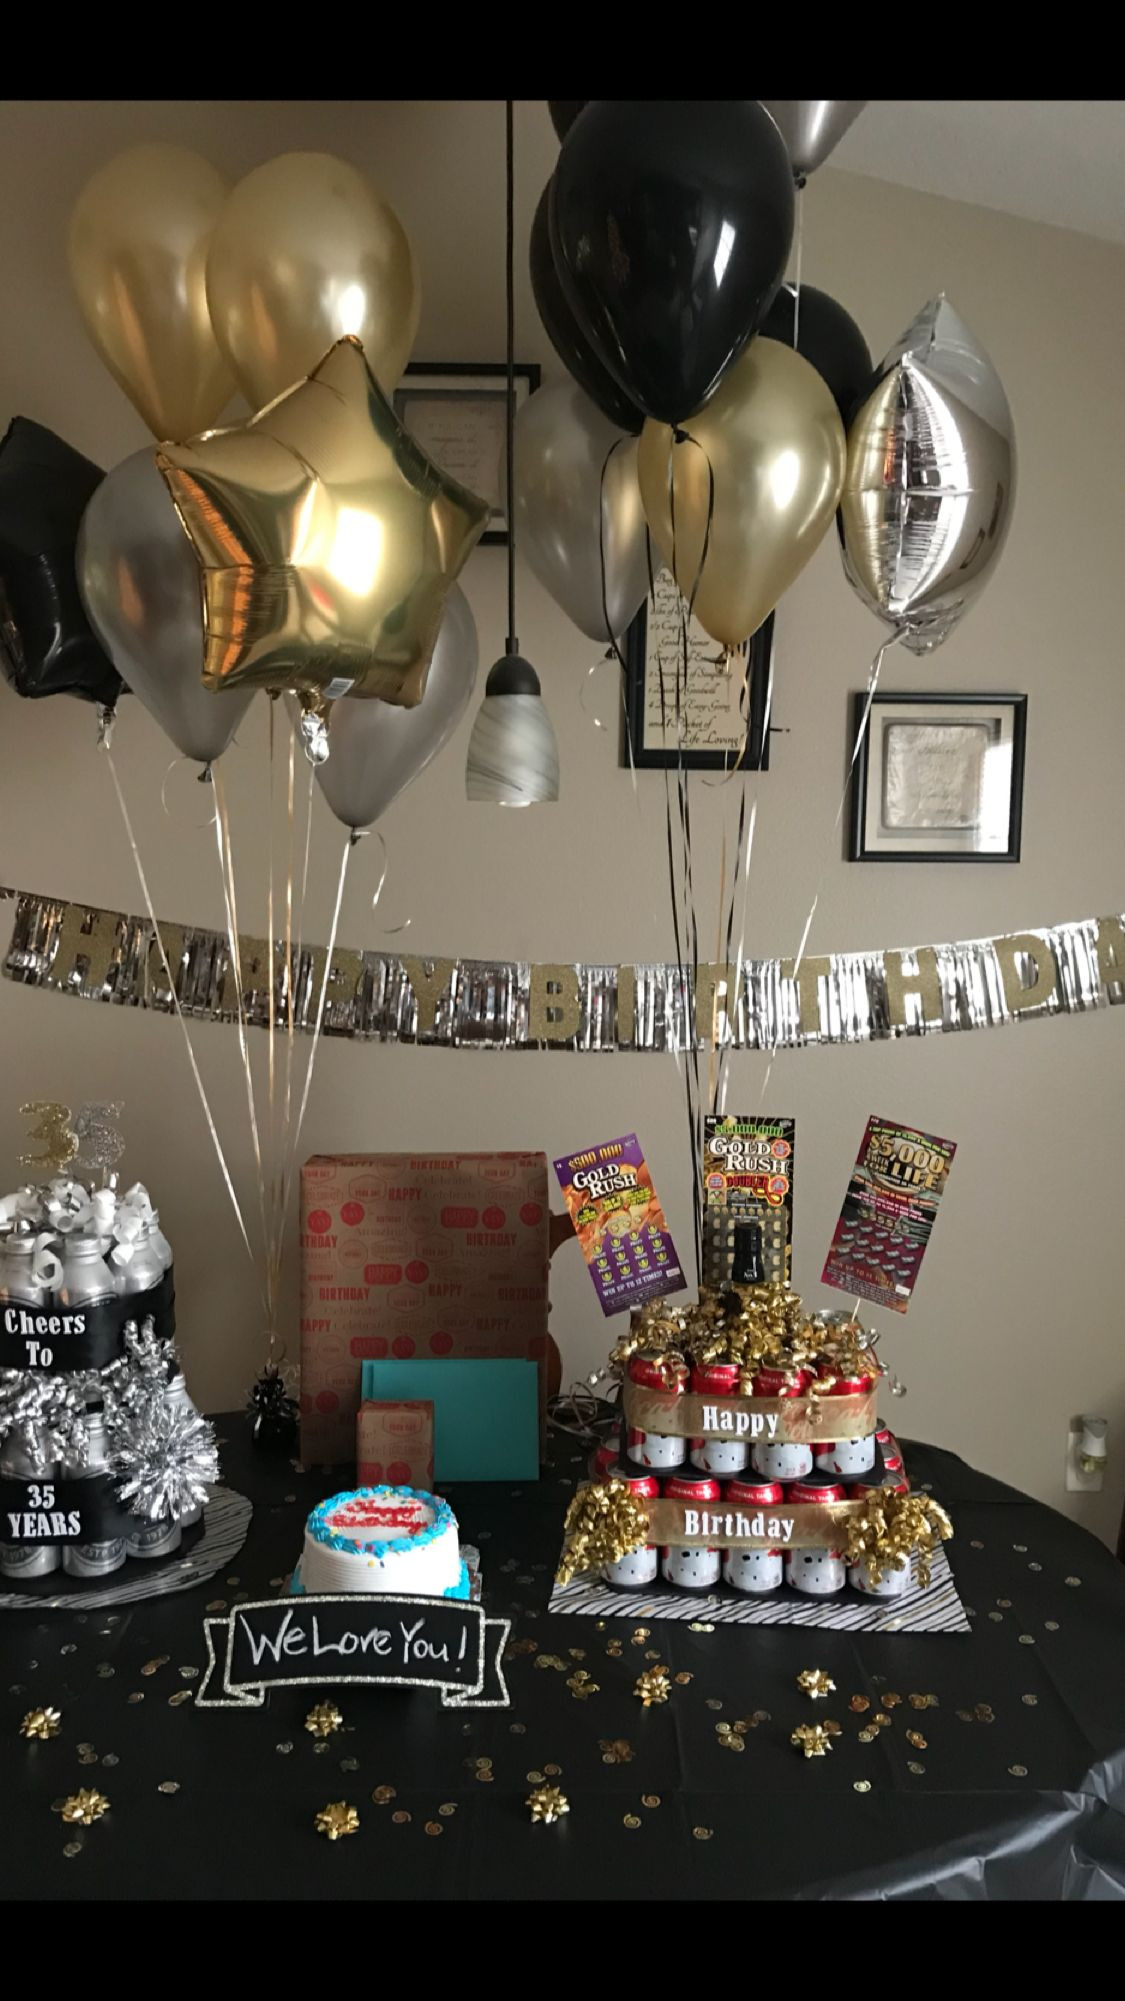 Creative Gift Ideas For Husband Birthday
 Husband birthday surprise